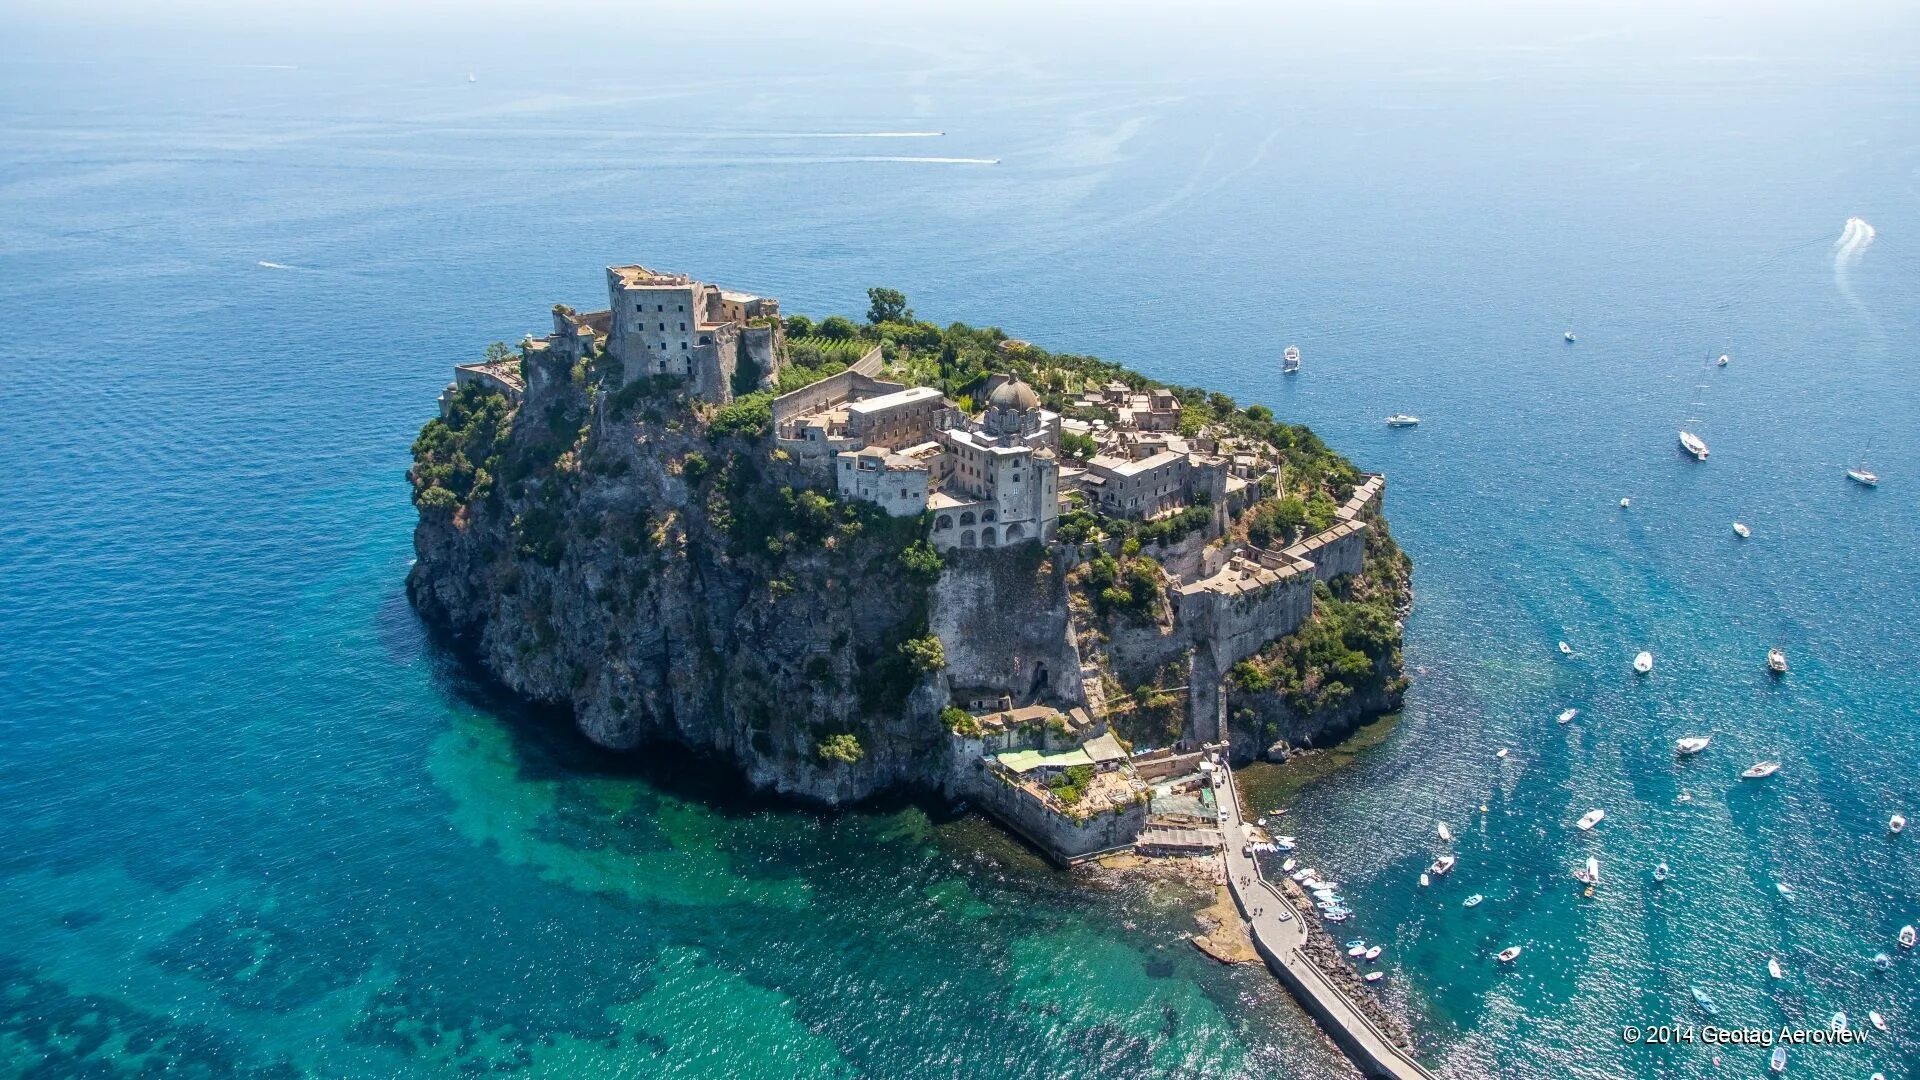 Mixed island. Неаполь остров Искья. Остров Искья в неаполитанском заливе. Средиземное море остров Искья. Искья скала Италия.